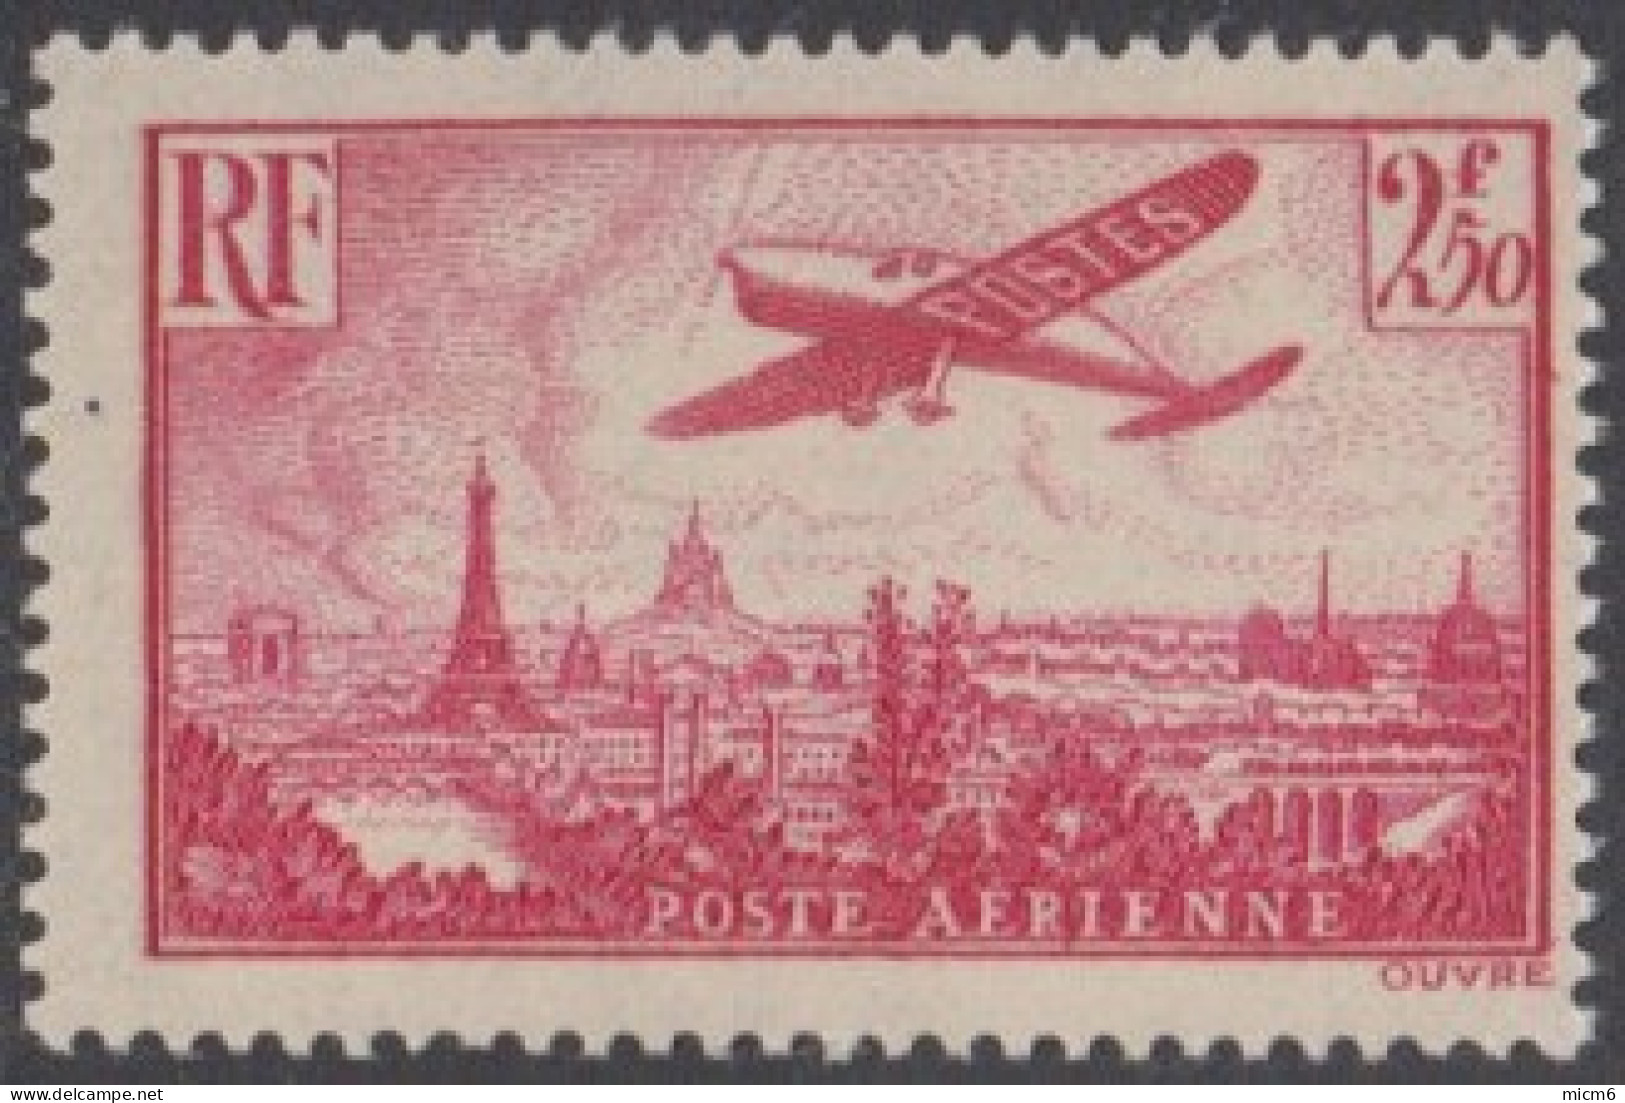 France - Poste Aérienne N° 11 (YT) N° 11 (AM) Neuf **.  - 1927-1959 Ungebraucht